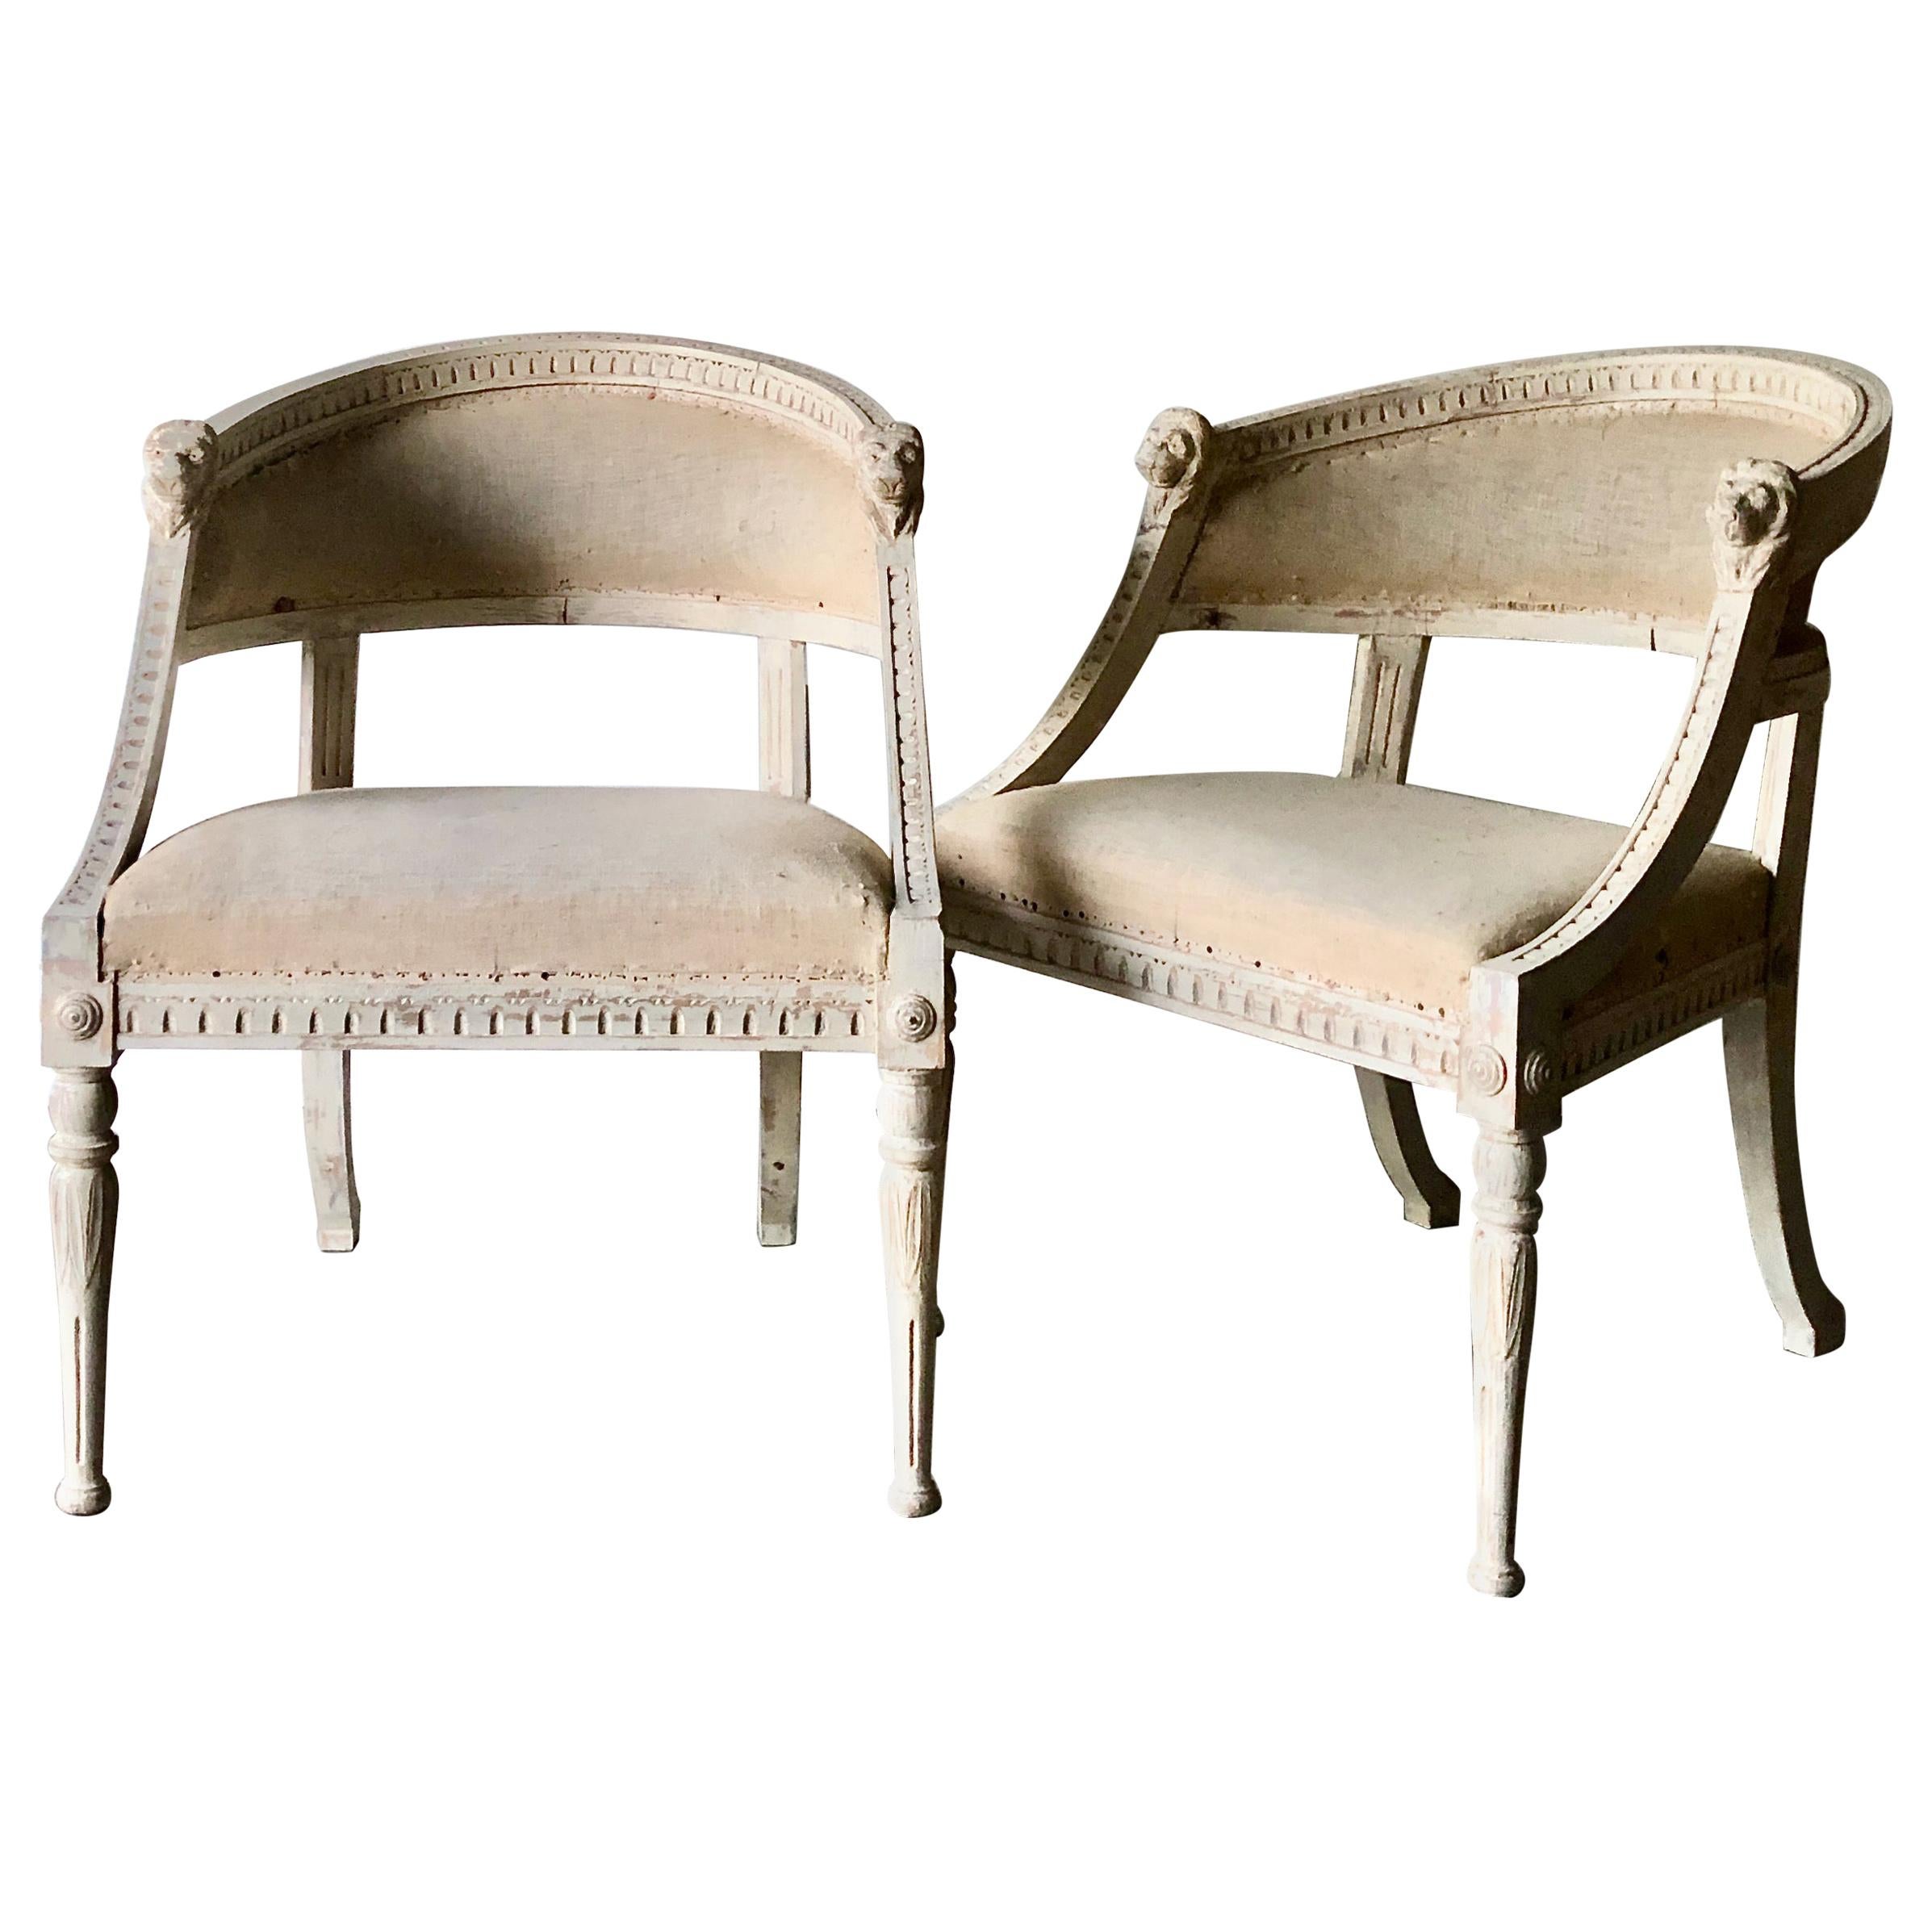 Pair of 19th Century Swedish Barrel Back Chairs